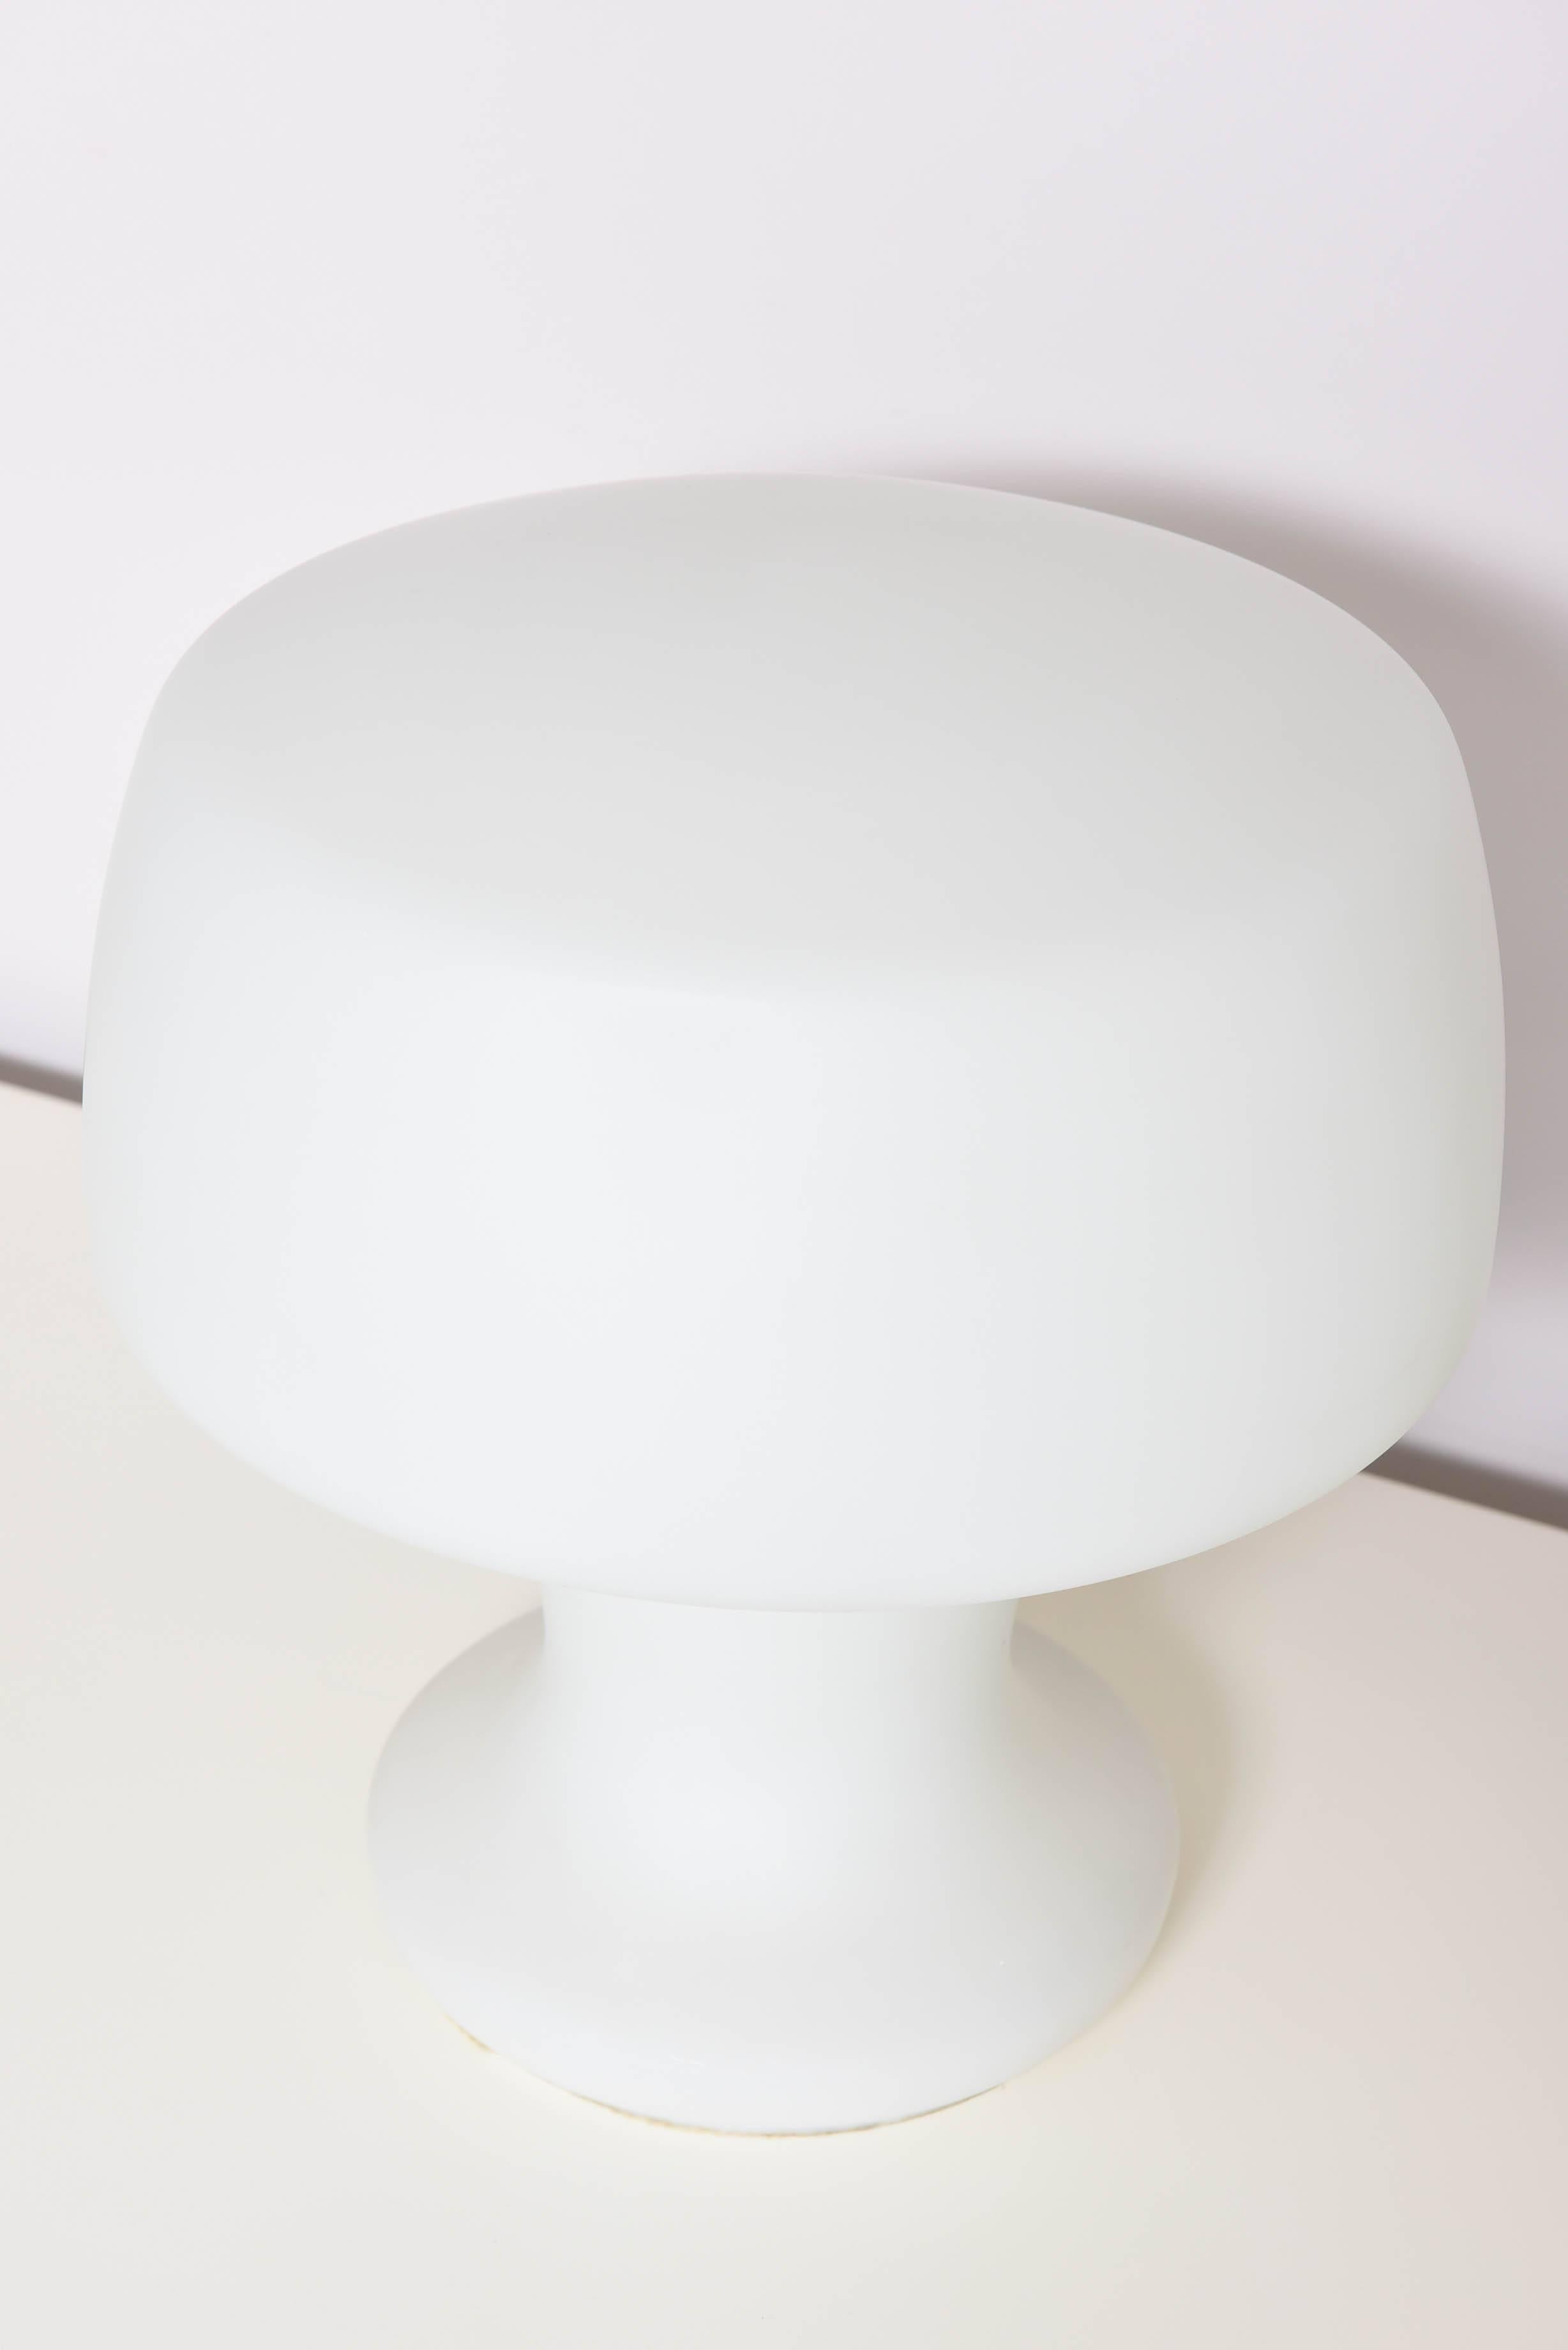 Mid-Century Modern SALE! SALE! SALE! PR/Mid- Century WHITE TABLE LAMPS modern statement impressive For Sale